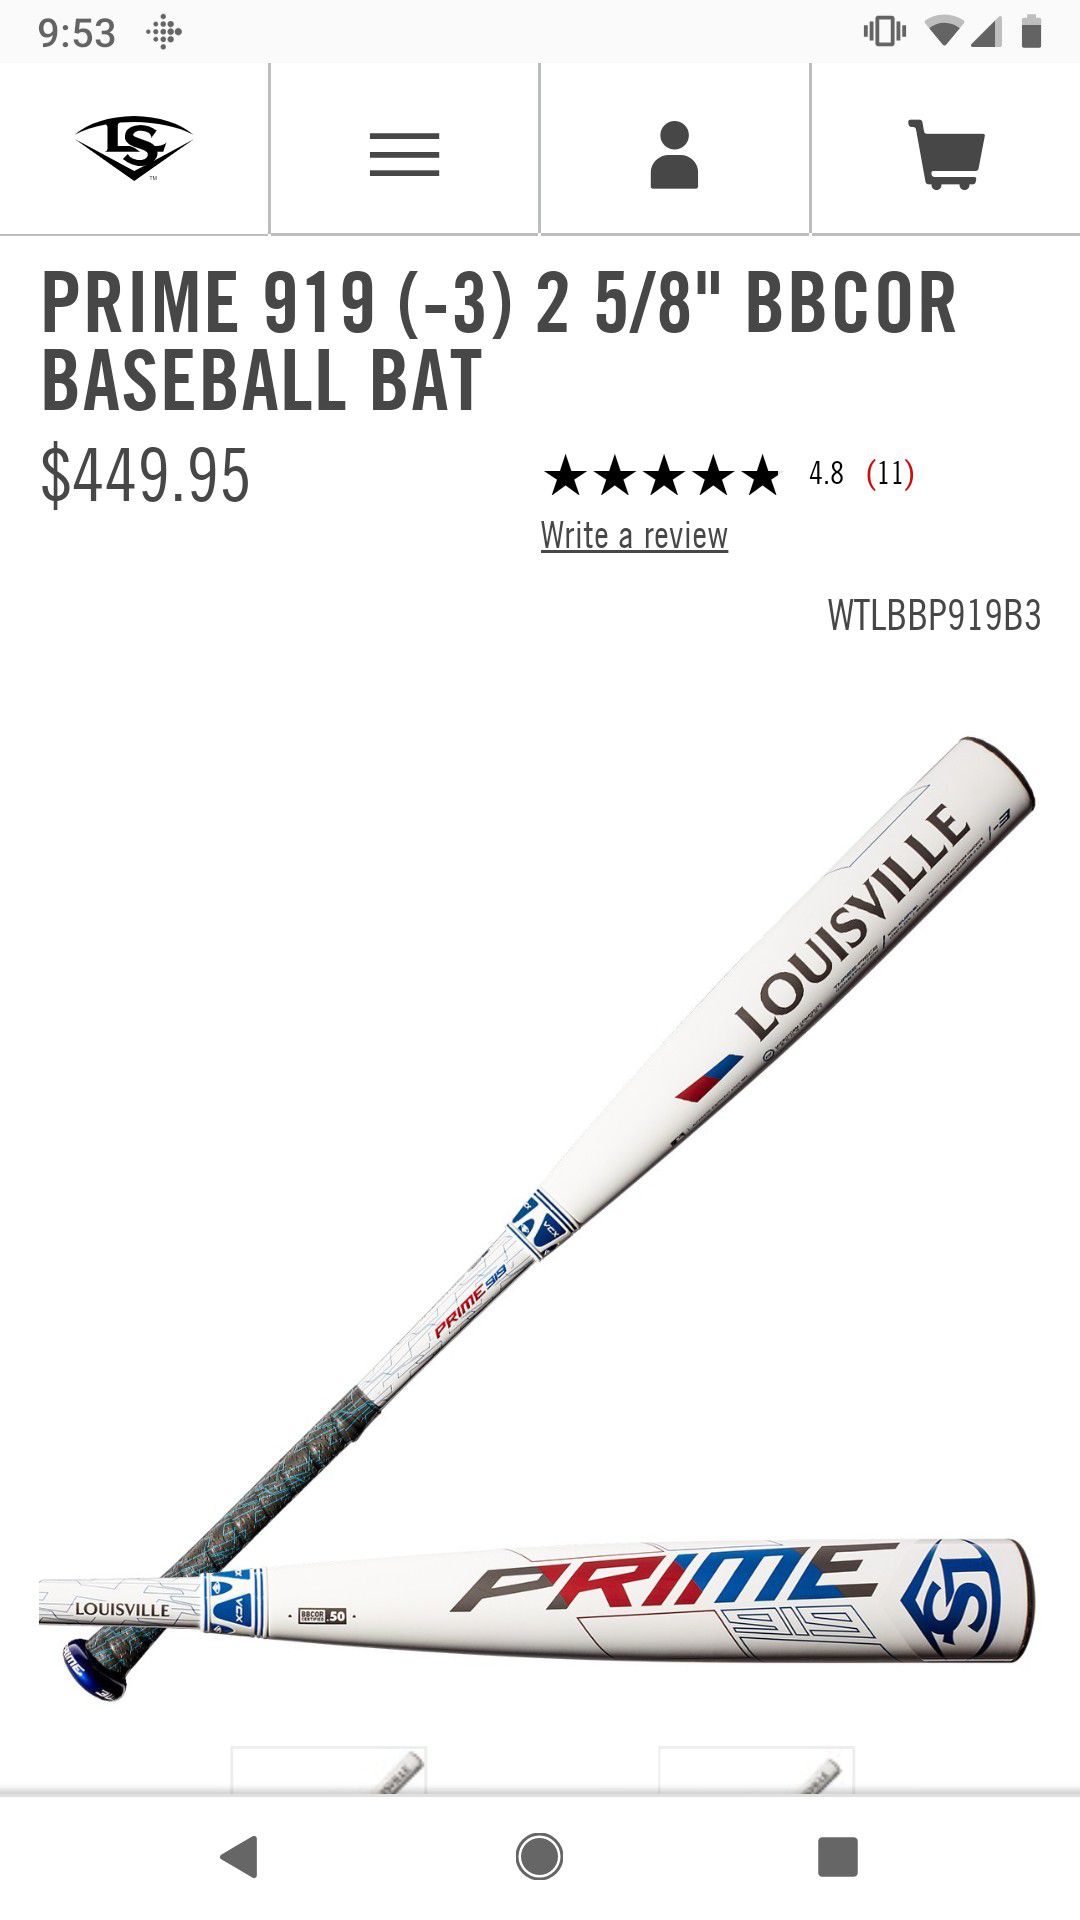 Louisville Prime 919 baseball bat